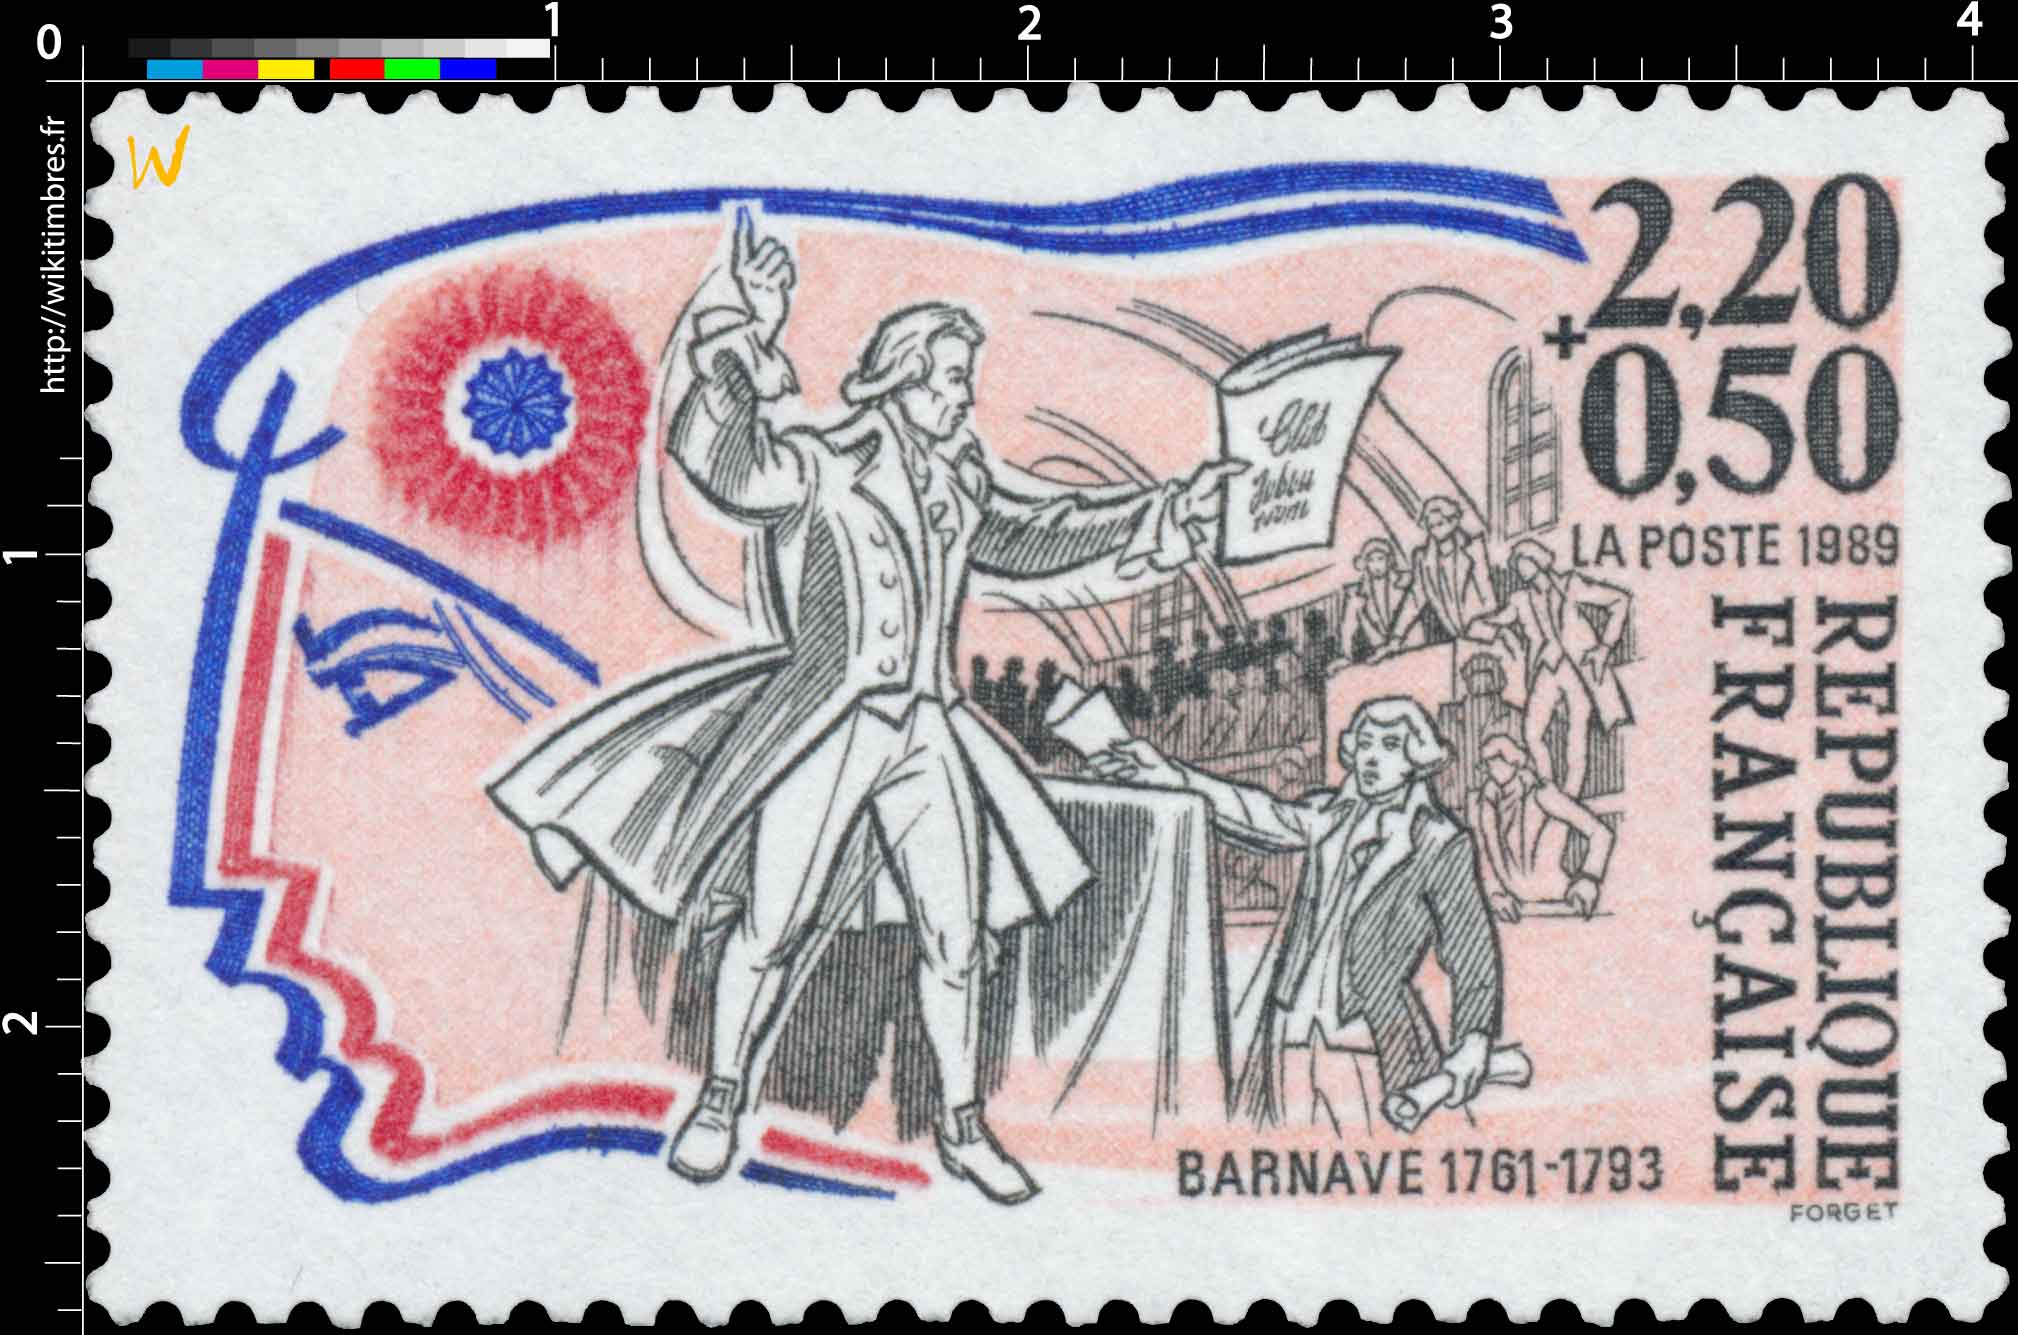 1989 BARNAVE 1761-1793